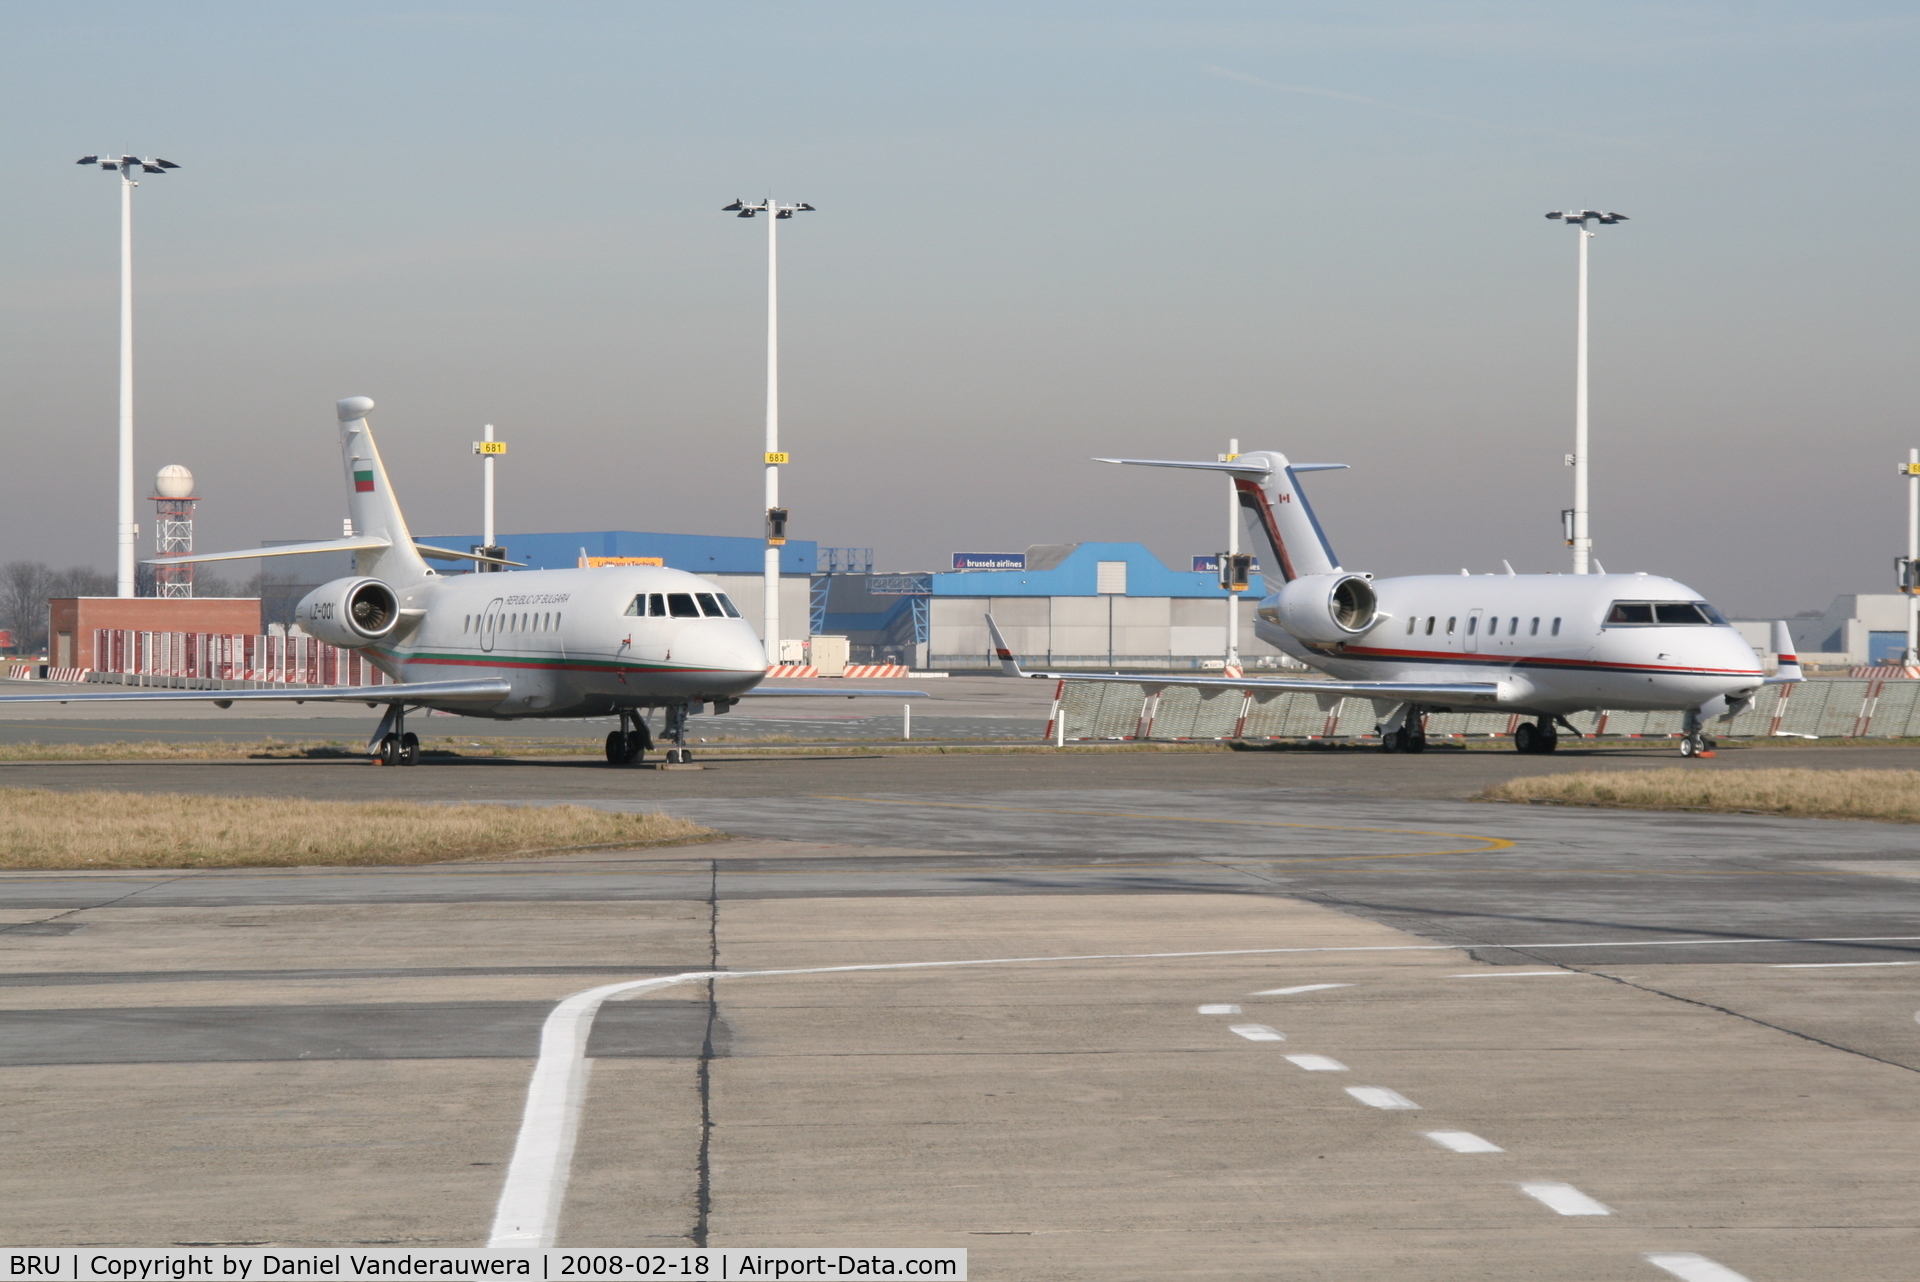 Brussels Airport, Brussels / Zaventem   Belgium (BRU) - left:  LZ-001  right:  C-GAWH